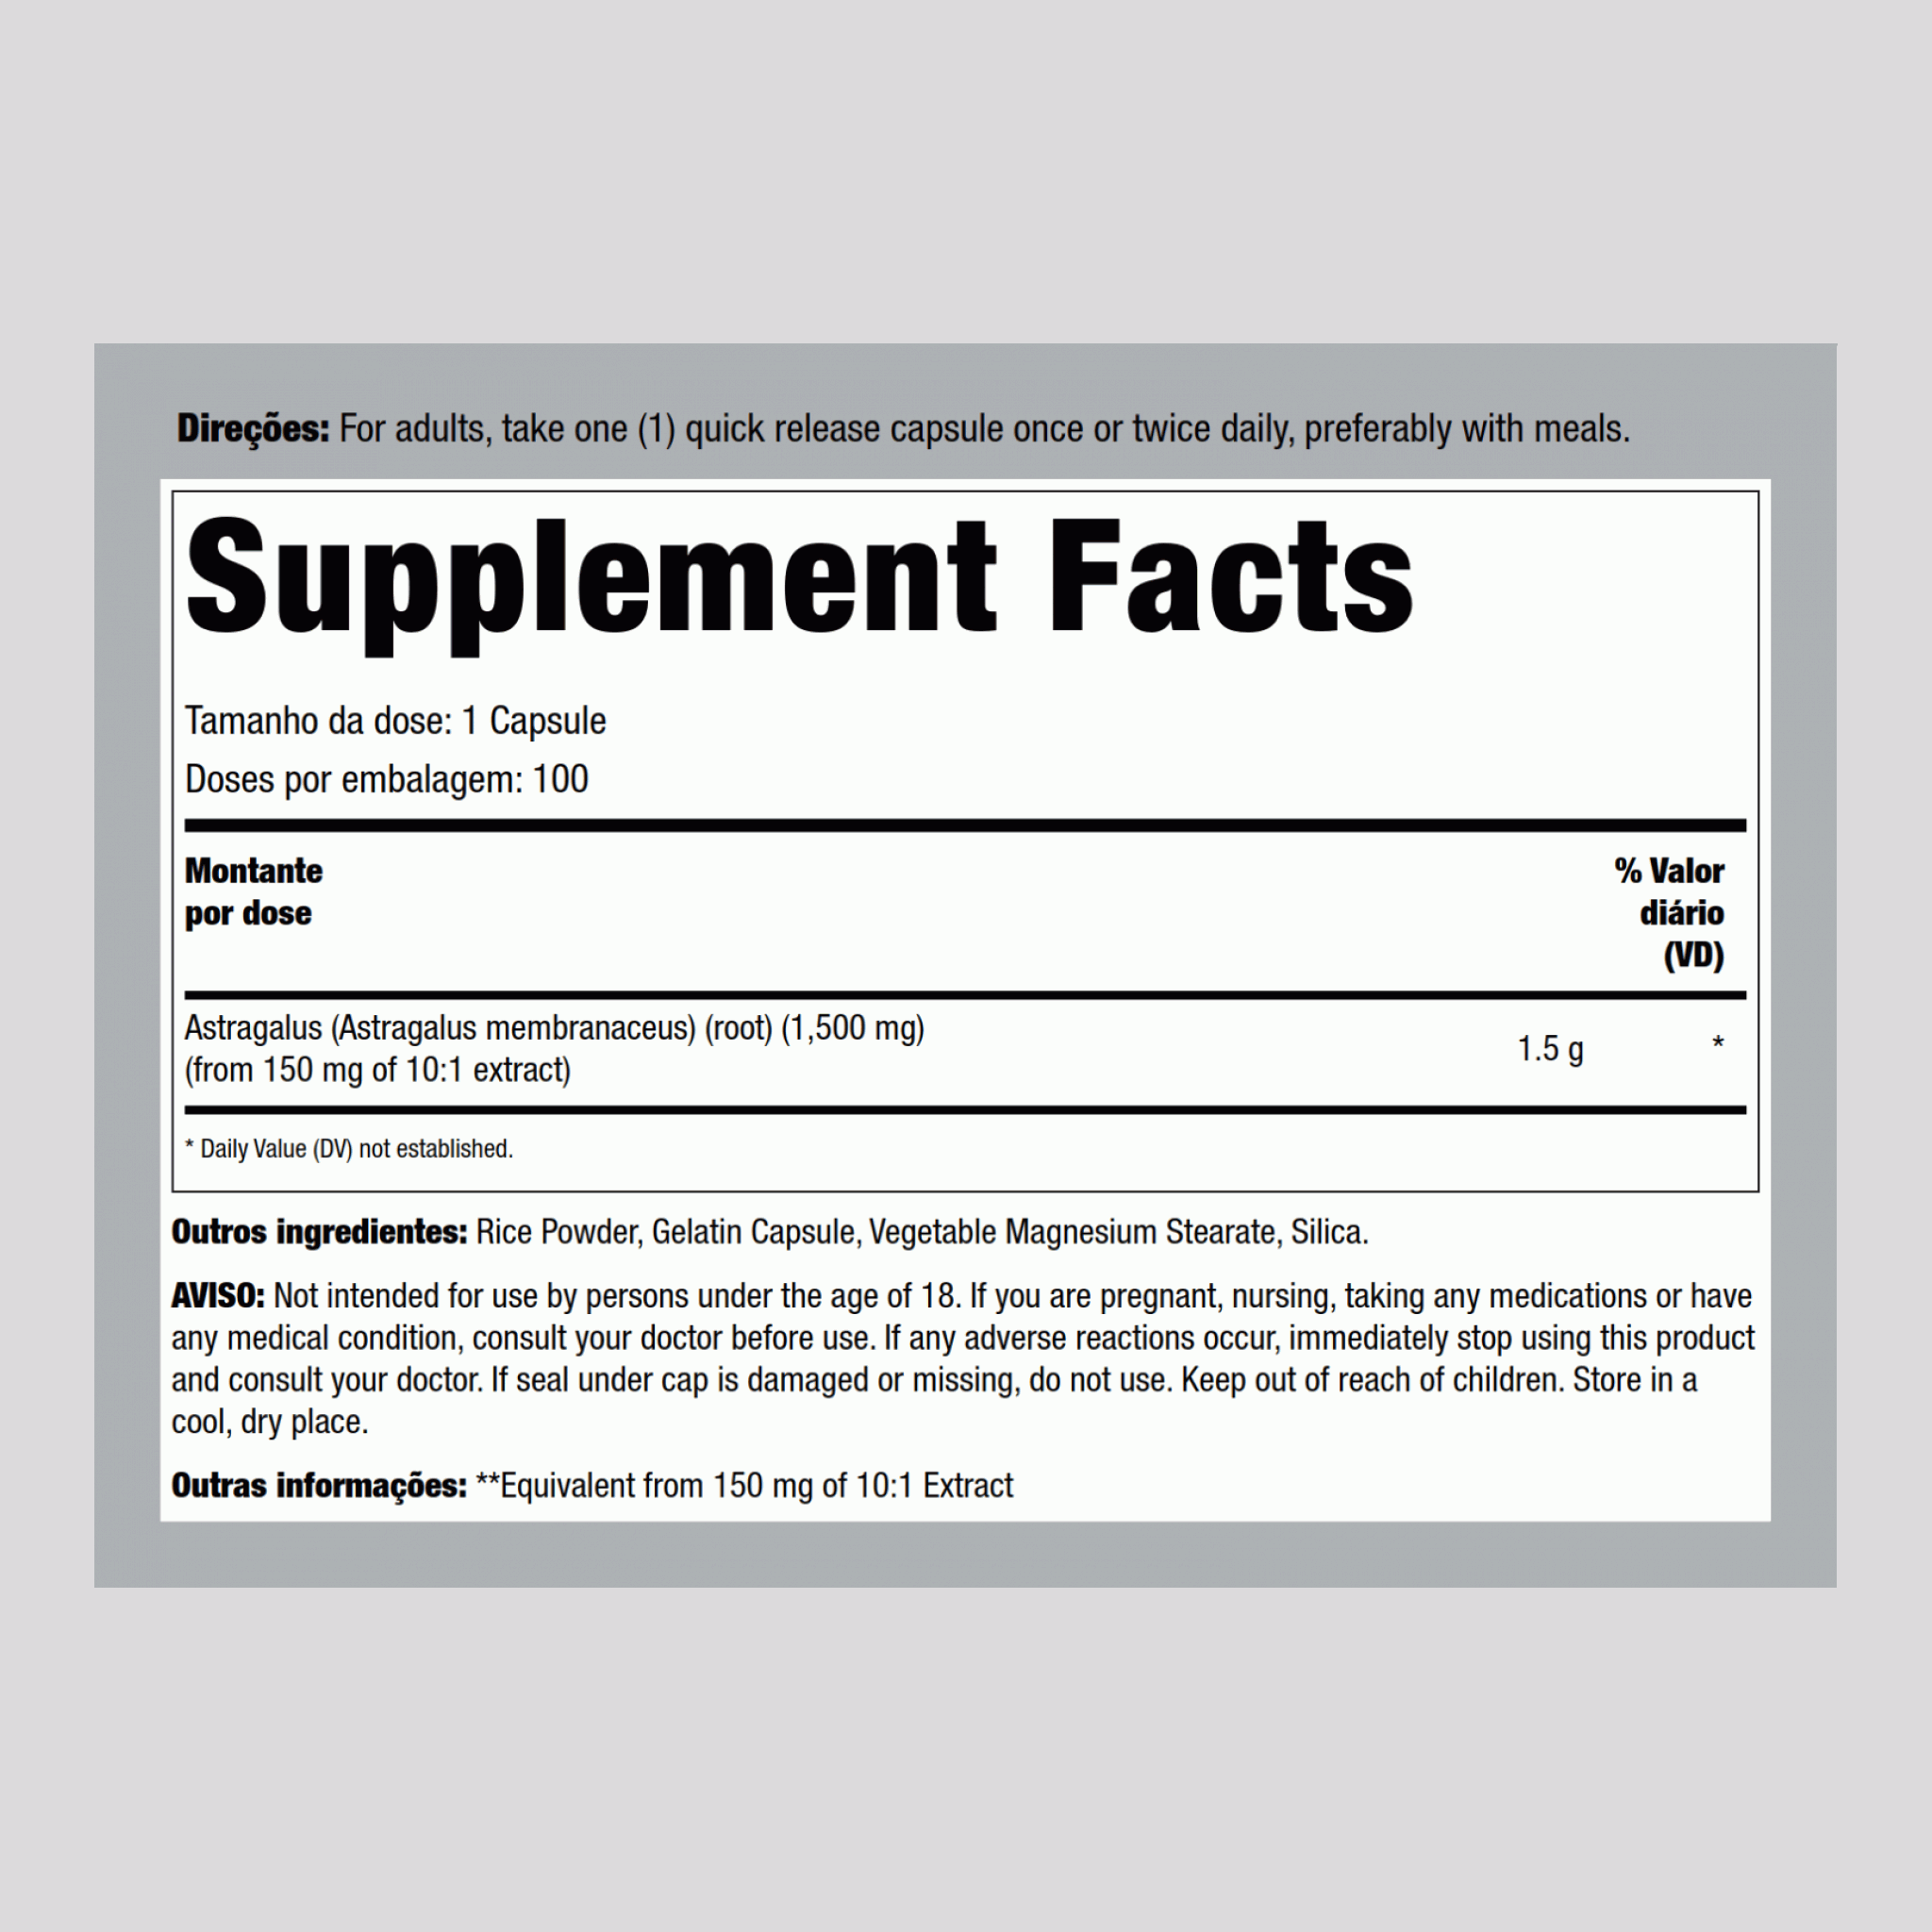 Extrato de Raiz de Astragalus 1500 mg 100 Cápsulas     